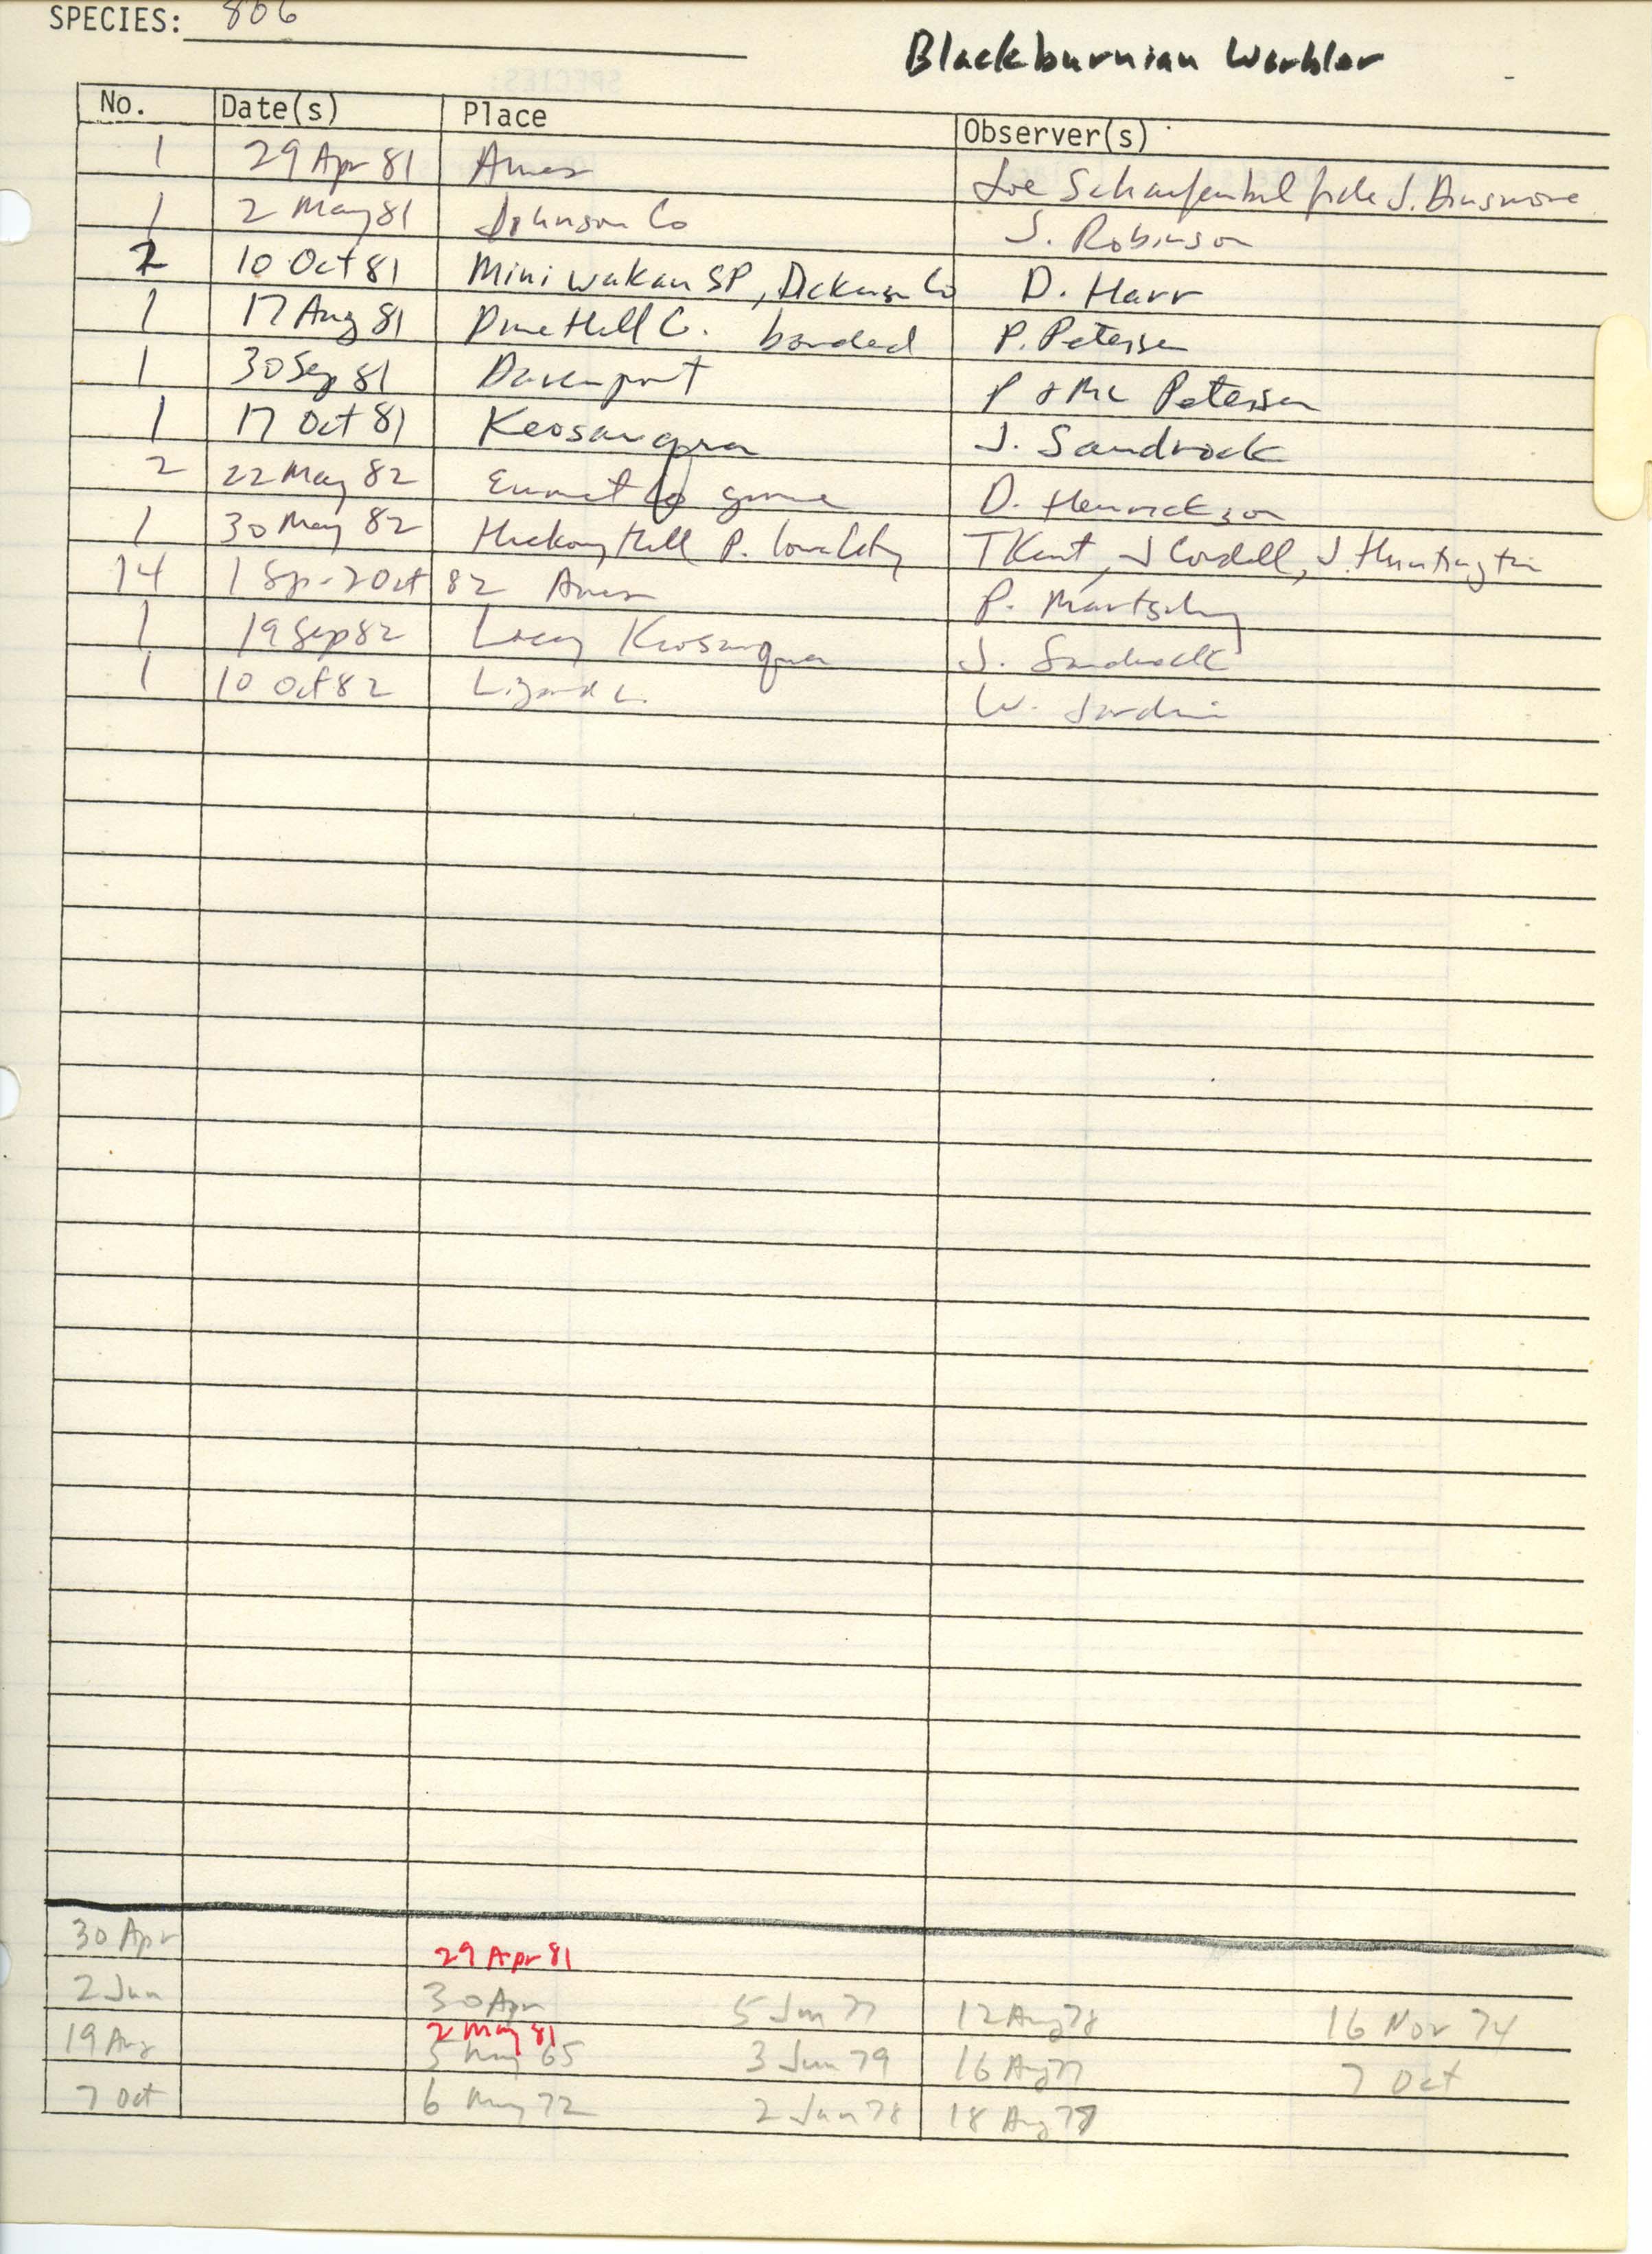 Iowa Ornithologists' Union, field report compiled data, Blackburnian Warbler, 1981-1982